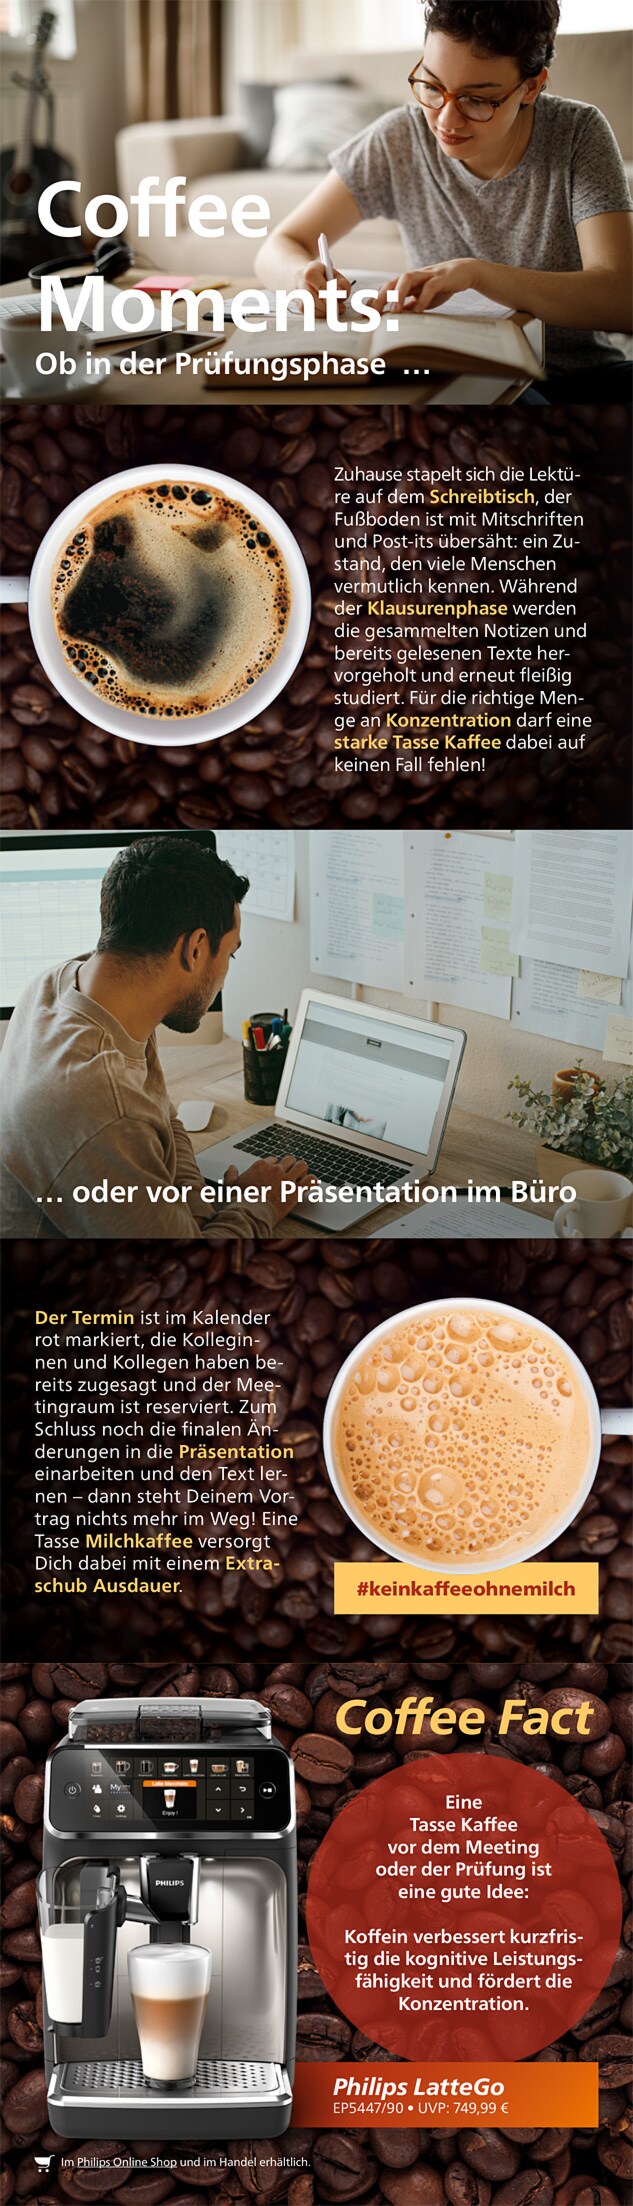 Philips Themensheet Coffee Moments - Teil5